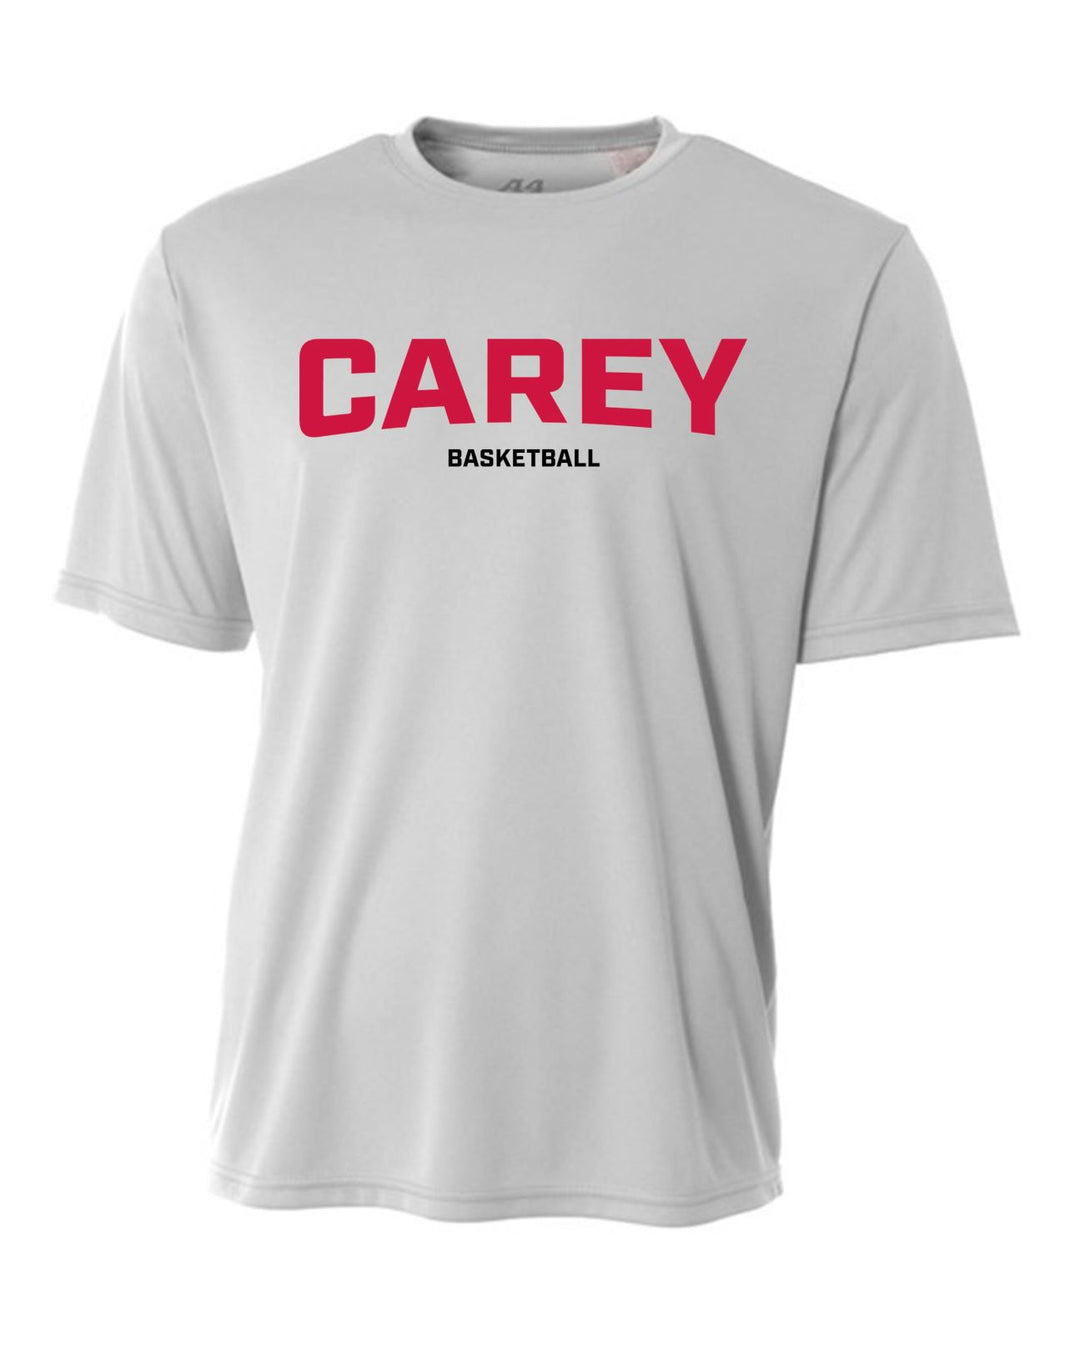 WCU Basketball Youth Short-Sleeve Performance Shirt WCU Basketball Silver CAREY - Third Coast Soccer